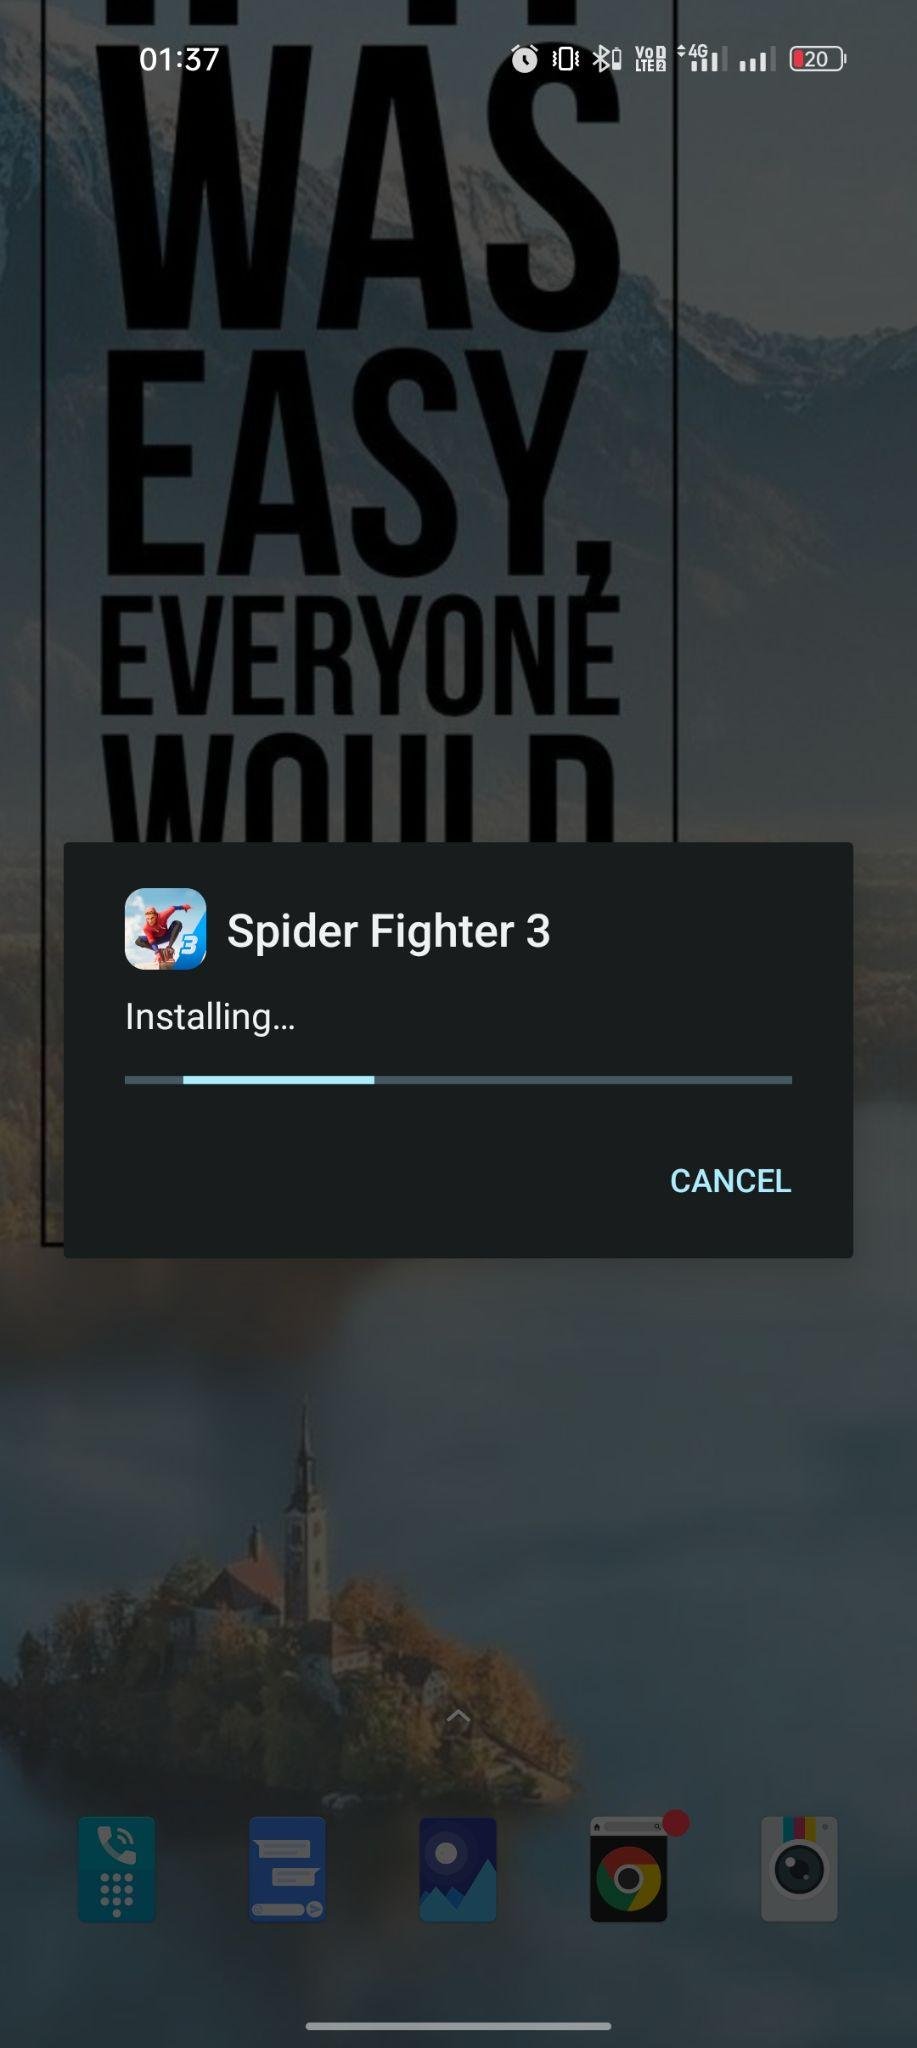 Spider Fighter 3 apk installing